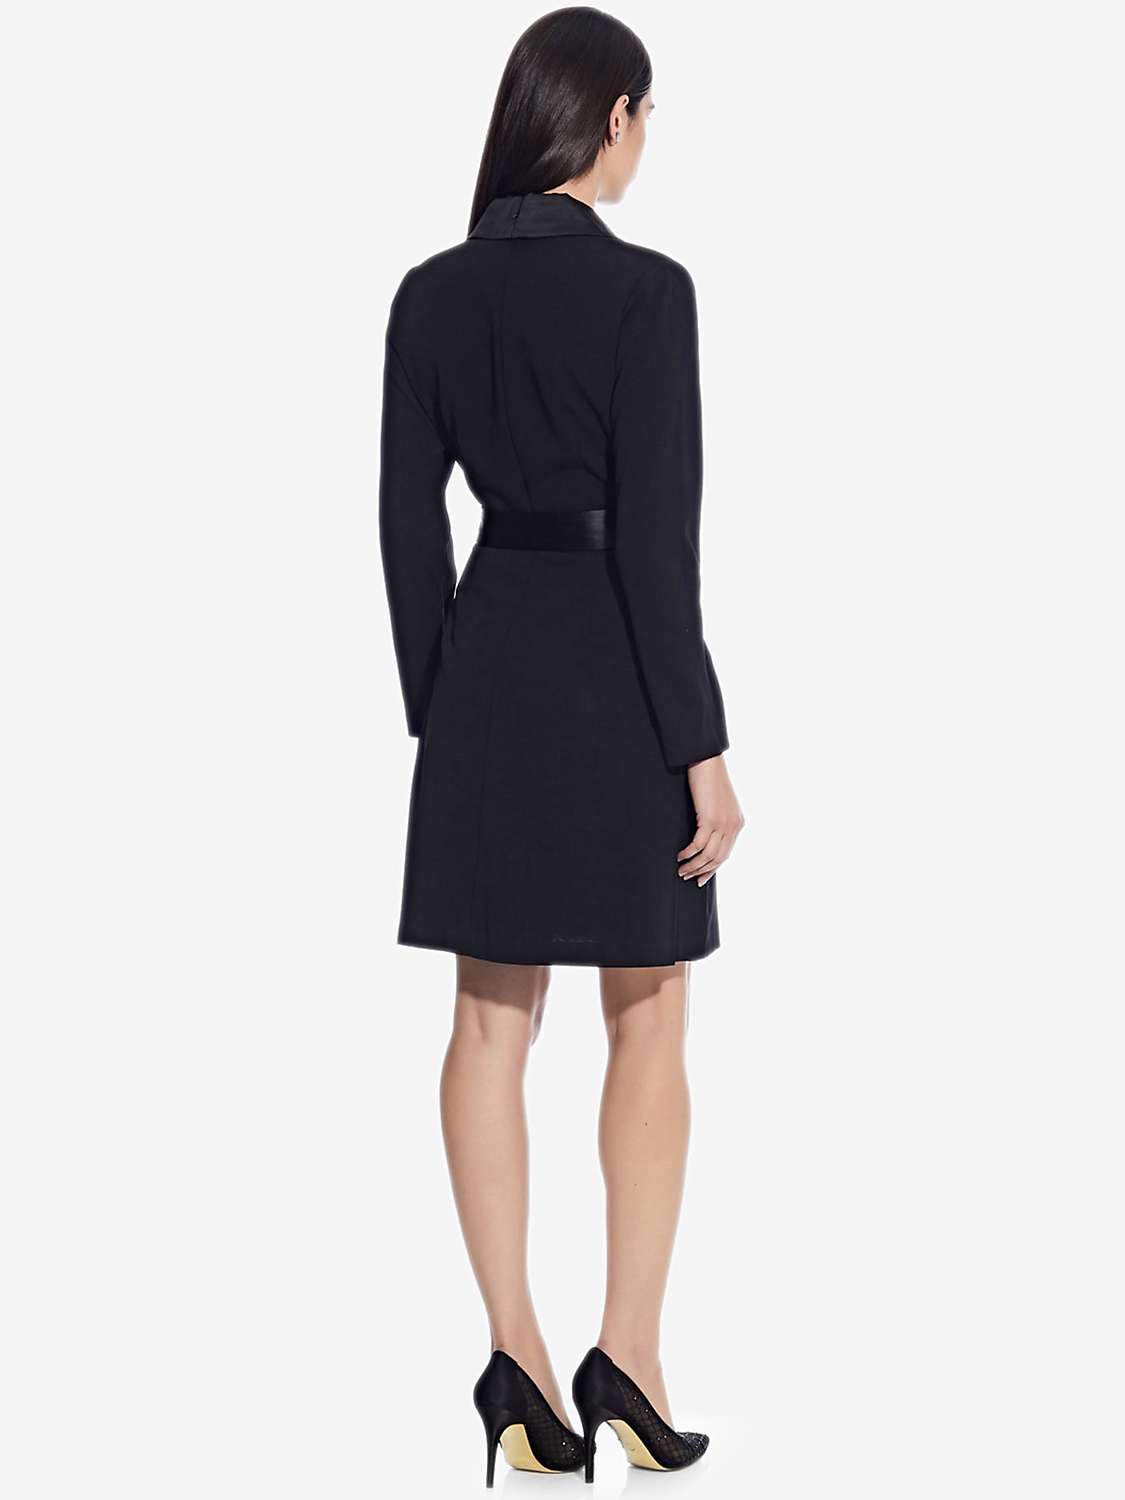 Buy Adrianna Papell Crepe Tuxedo A-Line Dress, Black Online at johnlewis.com